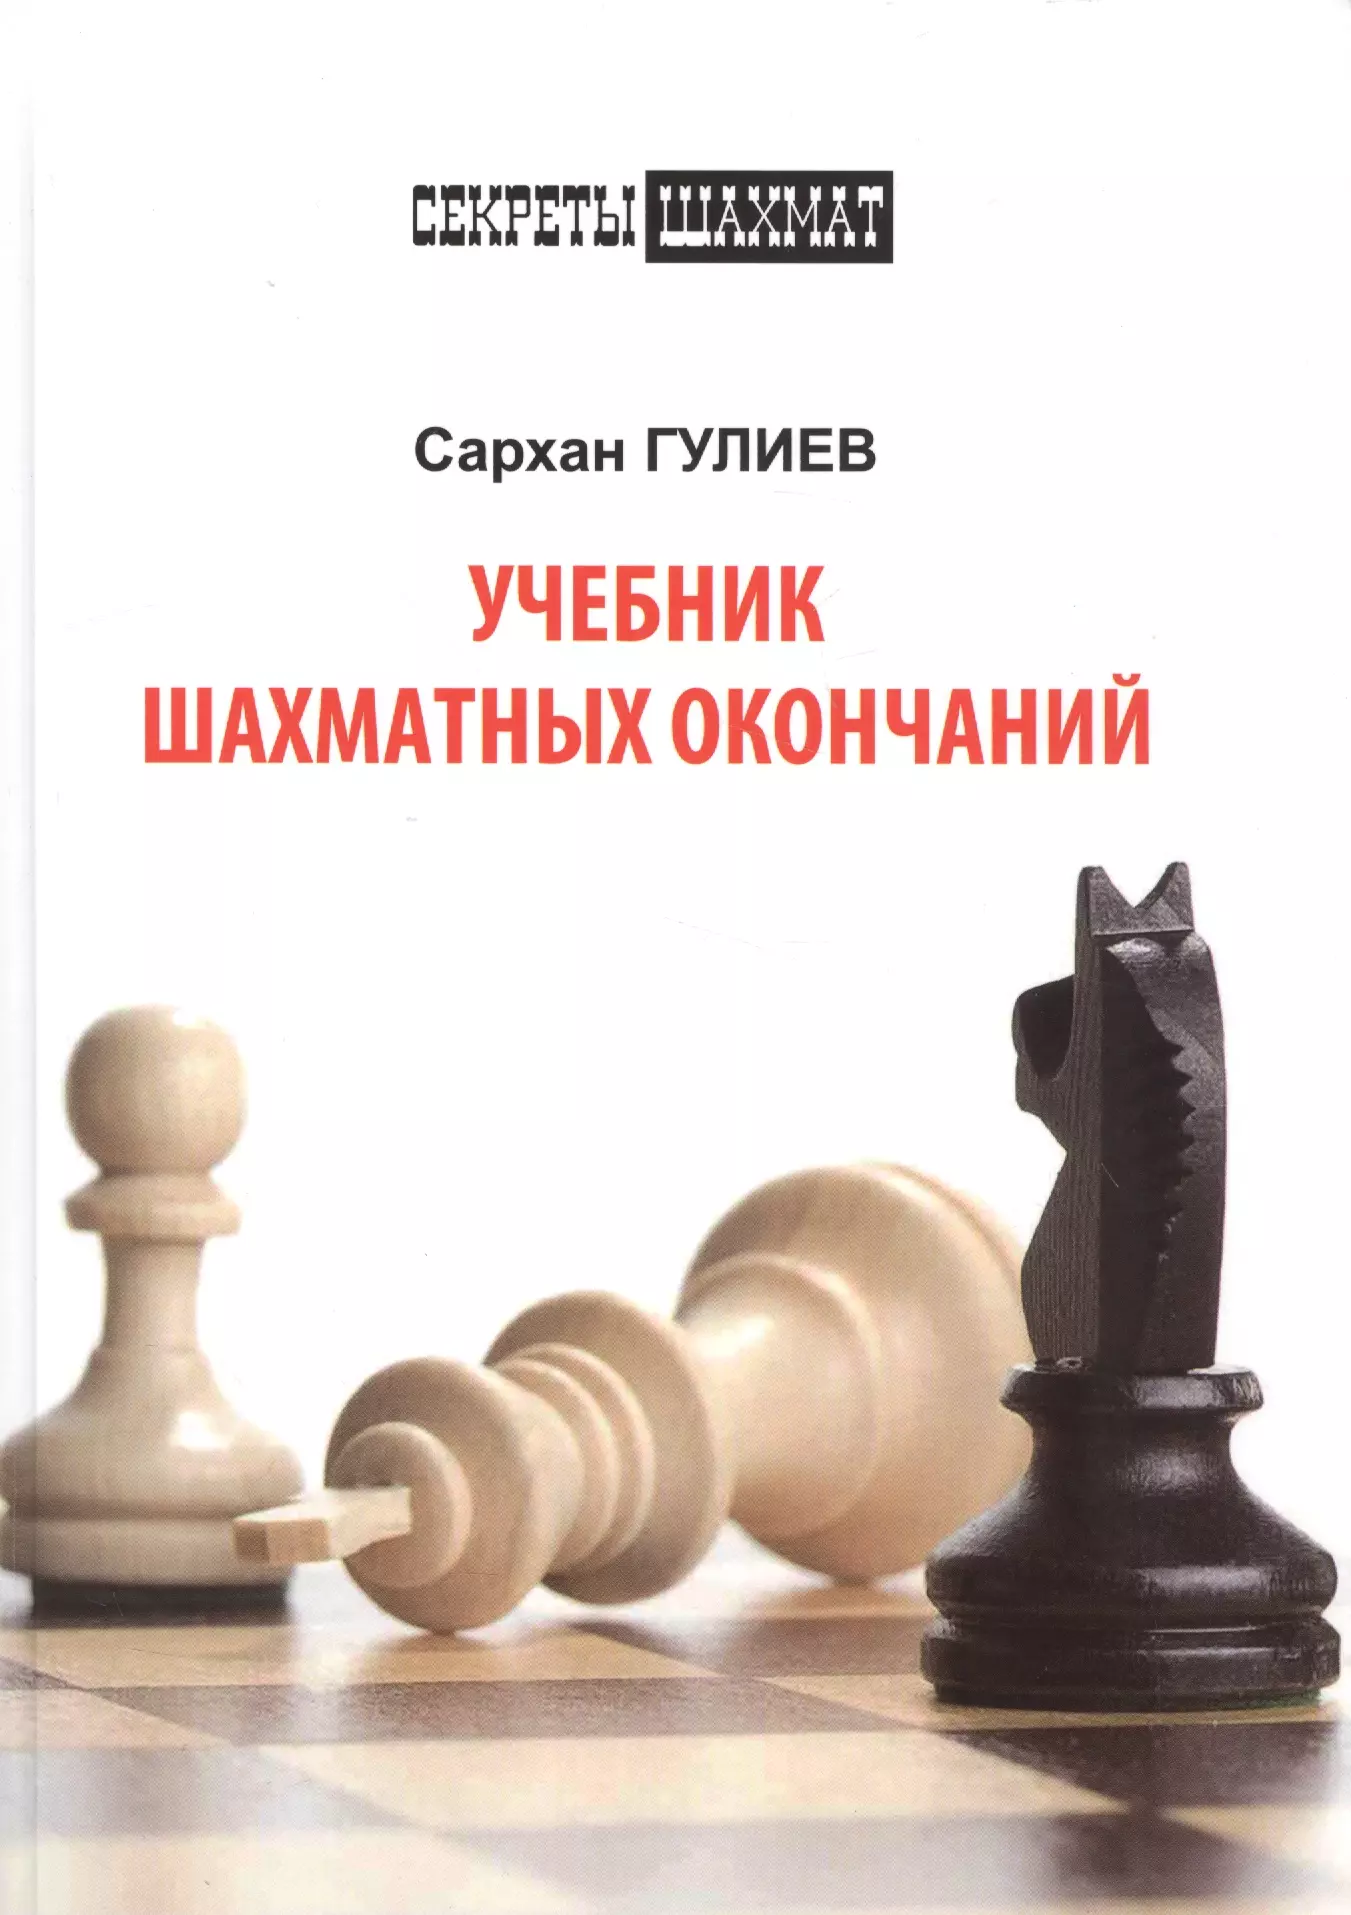 гулиев сархан the manual of chess ends учебник шахматных окончаний Учебник шахматных окончаний